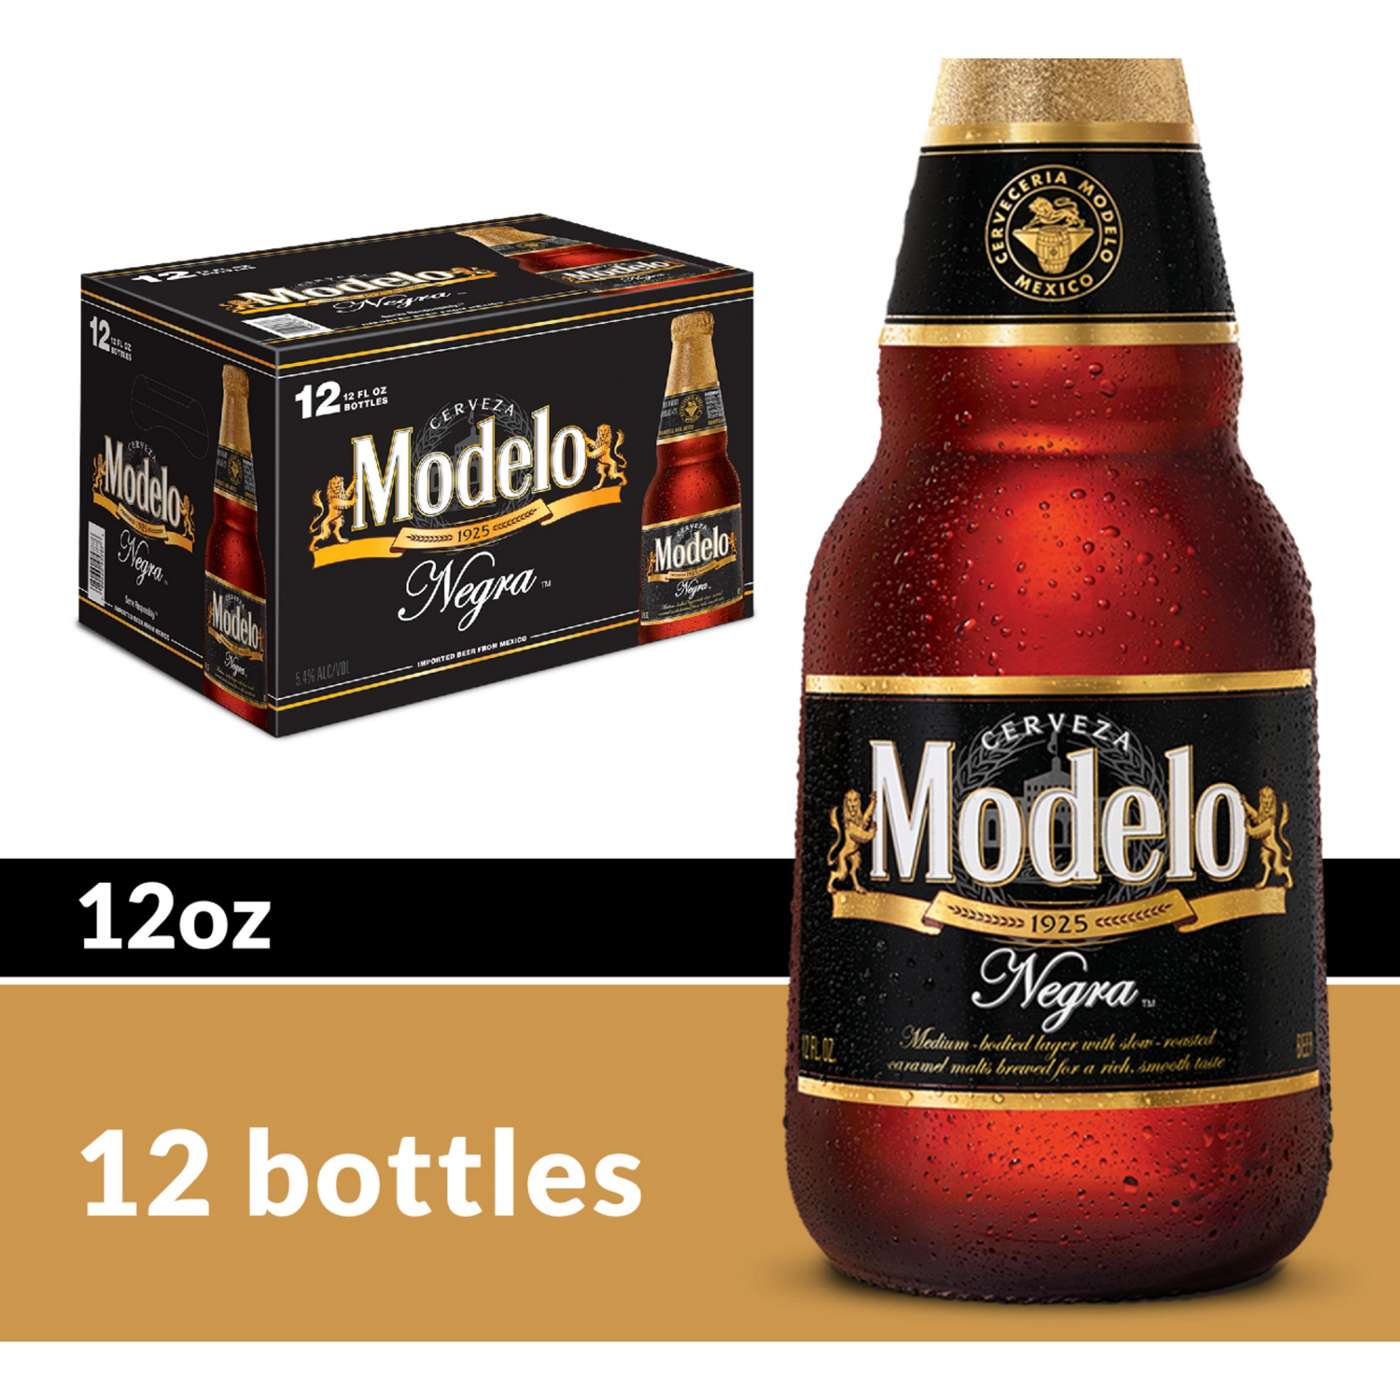 Modelo Negra Amber Lager Mexican Import Beer 12 oz Bottles, 12 pk; image 8 of 9